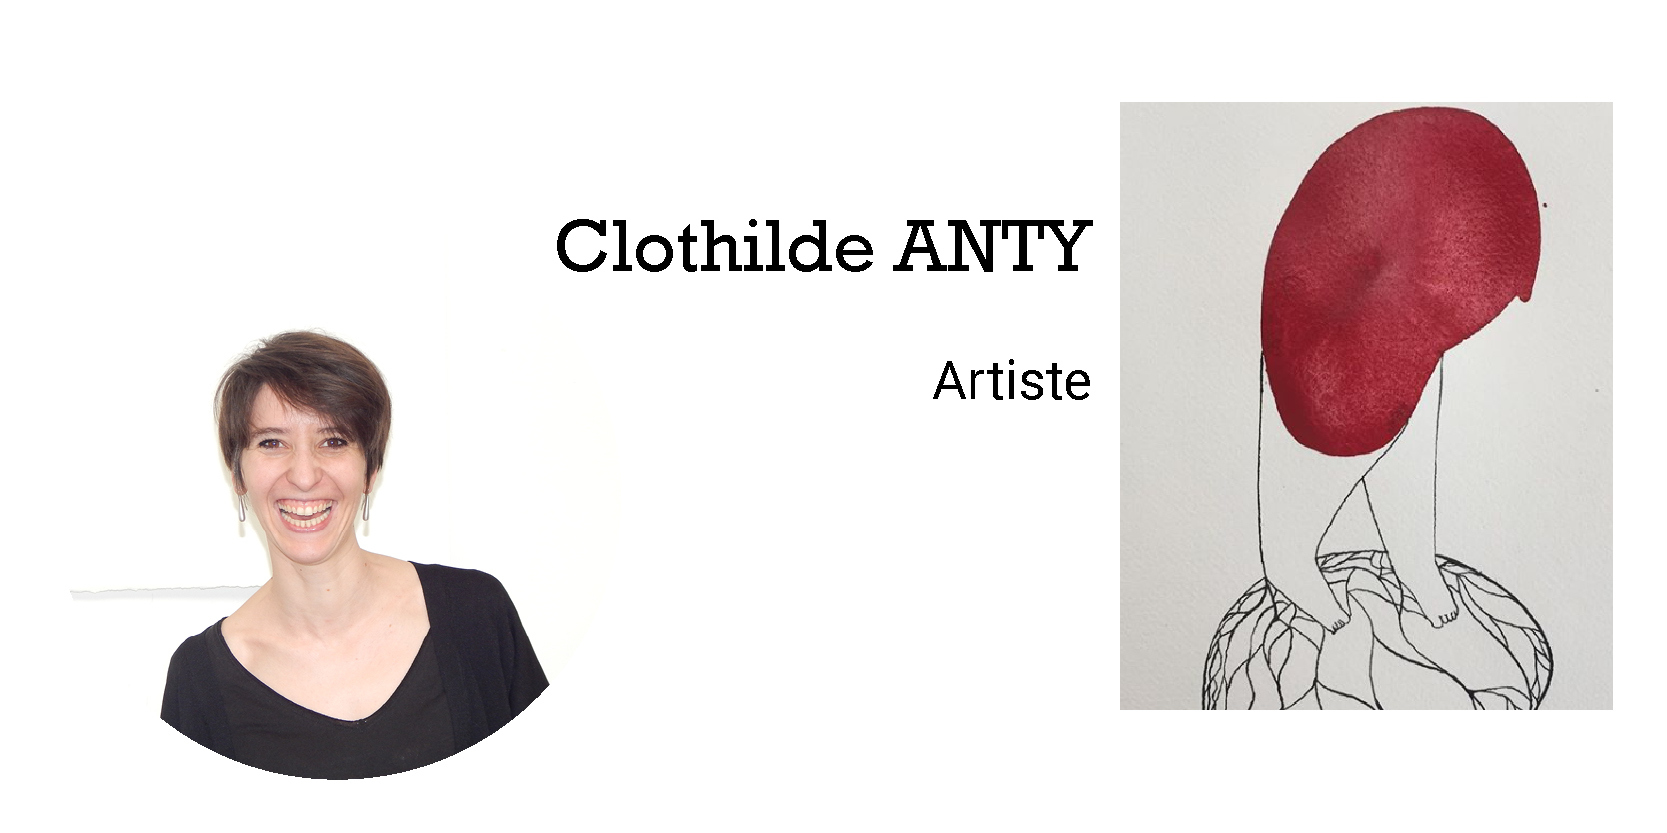 Clothilde Anty